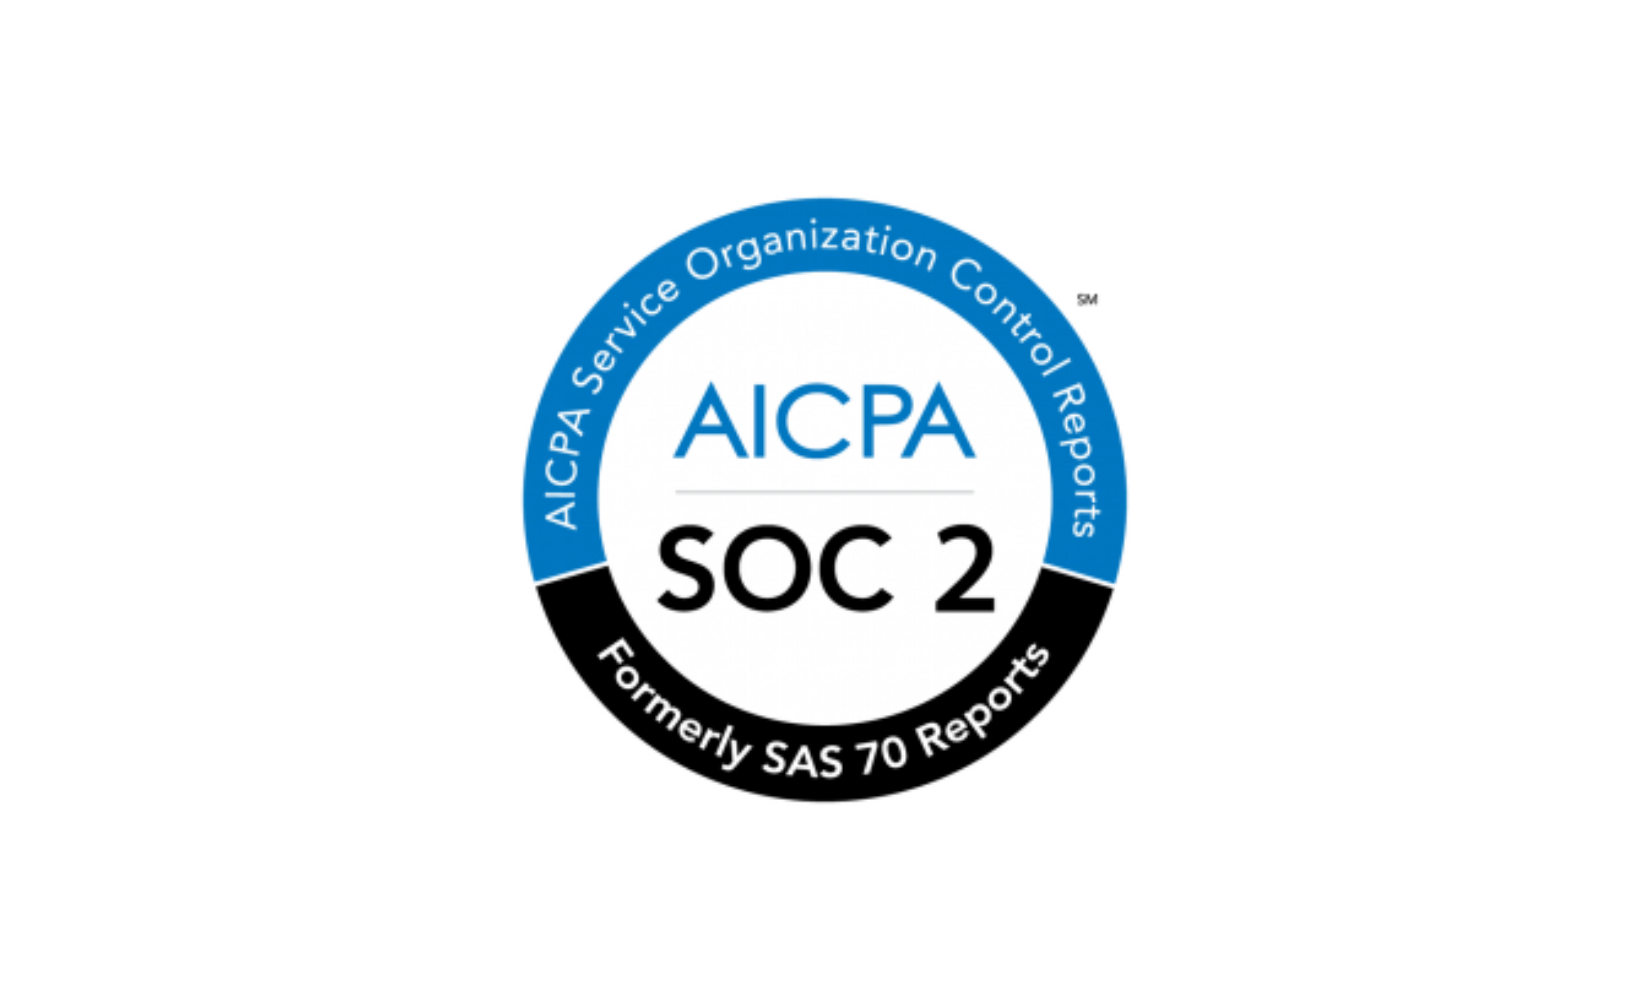 aicpa soc 2 certification logo